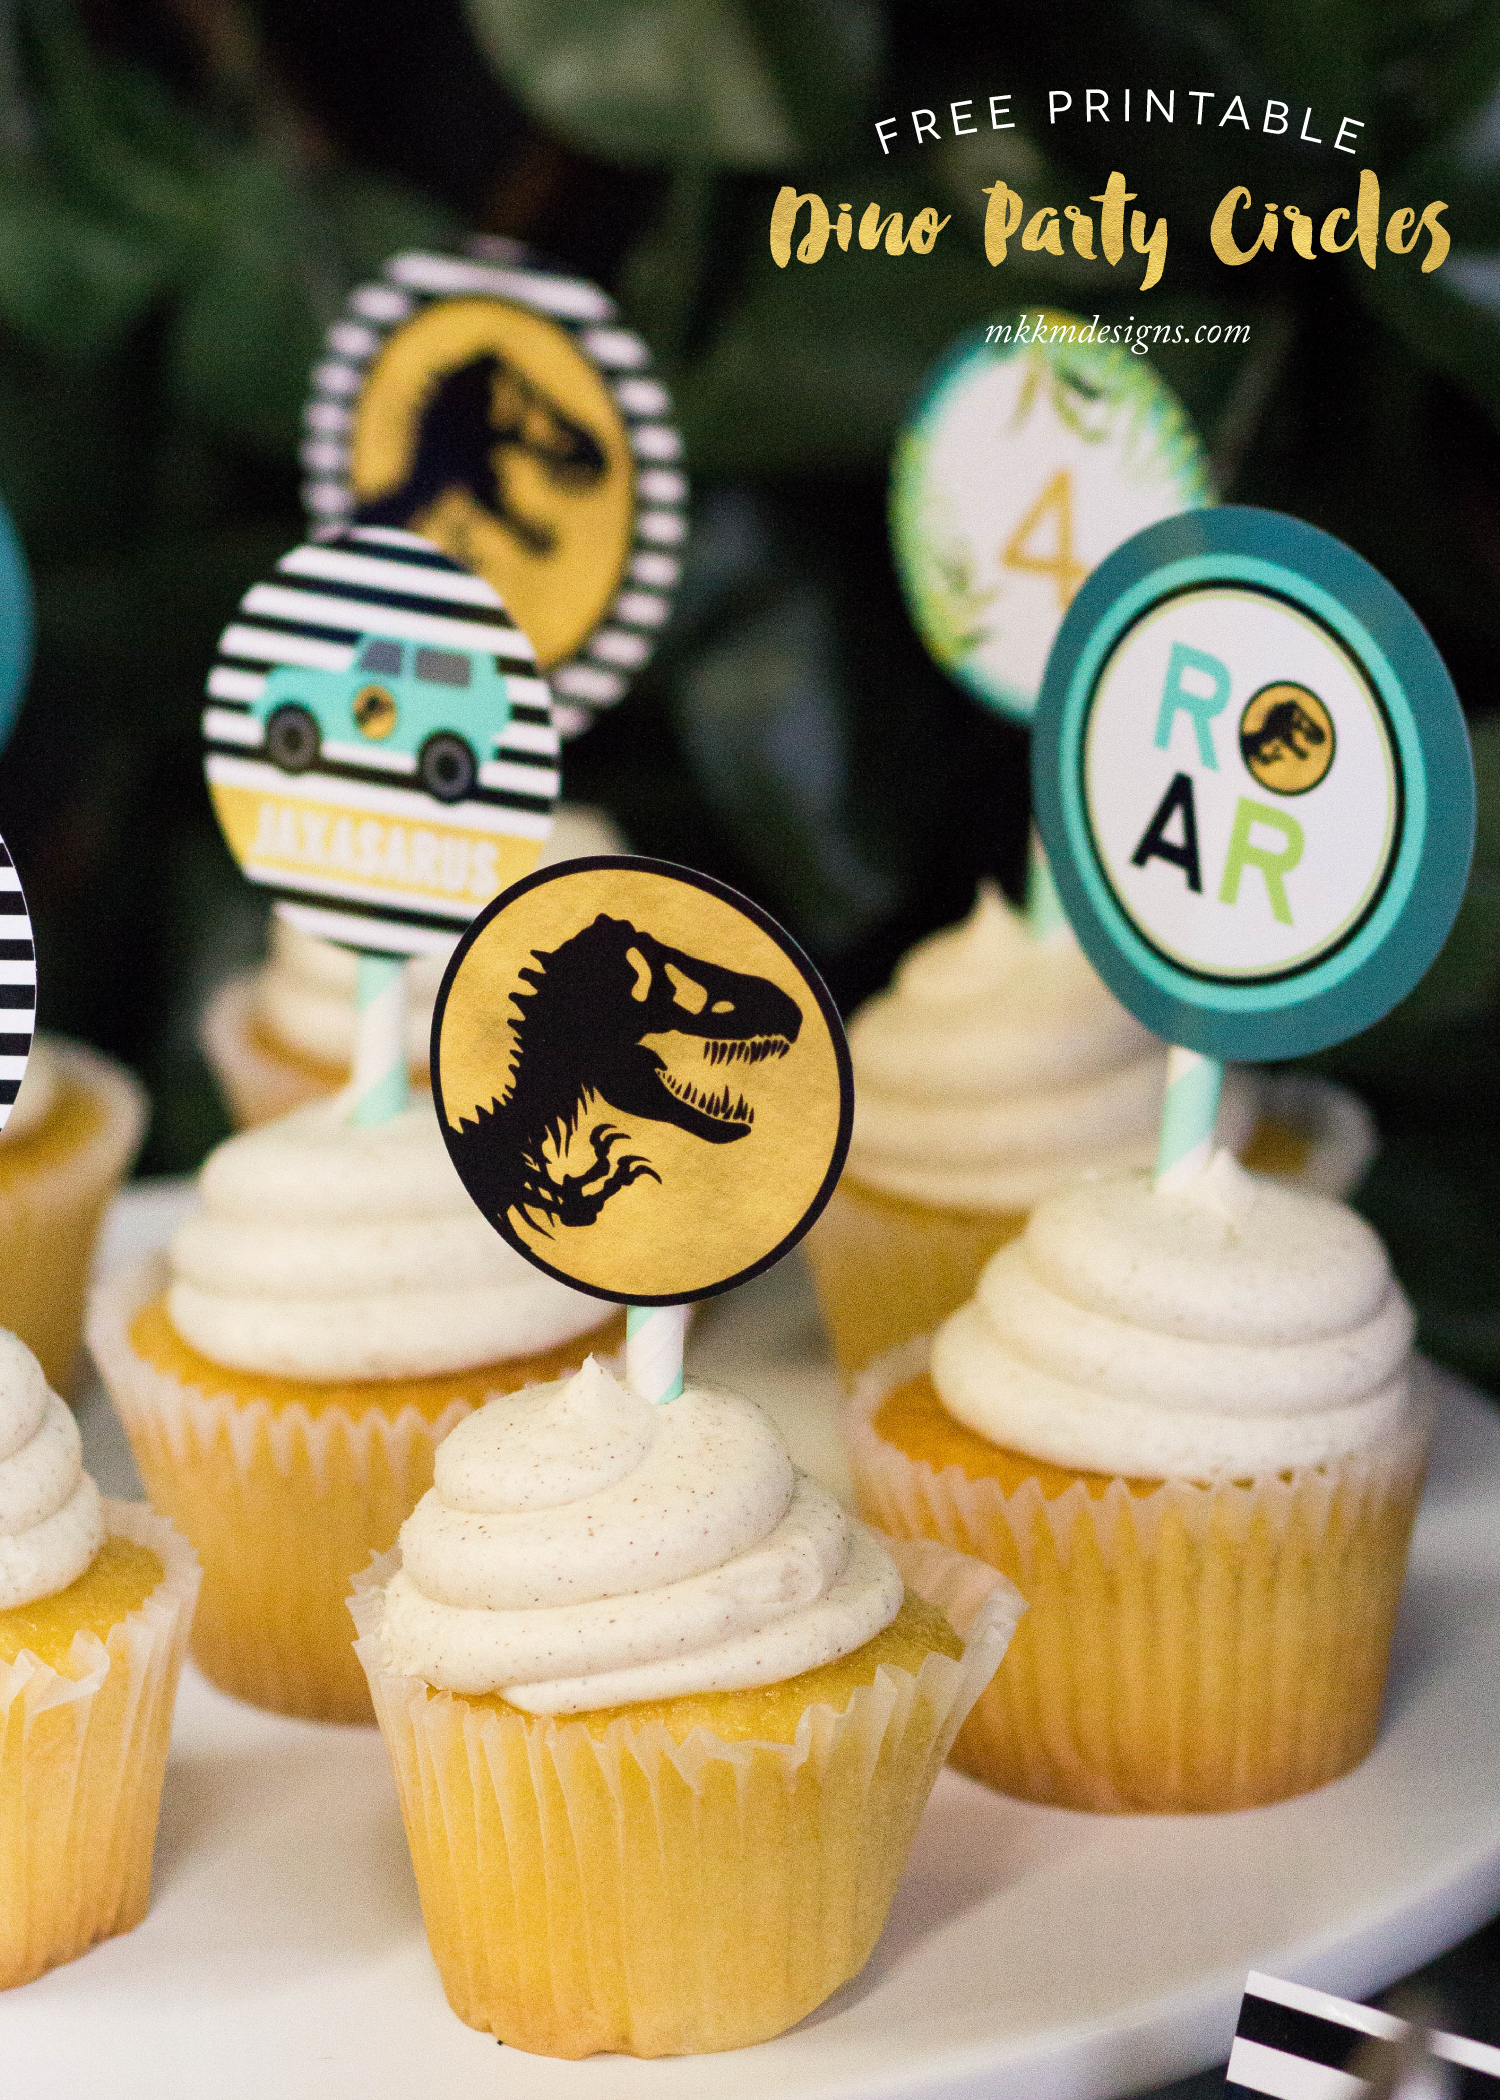 Free Printable Dinosaur Cupcake toppers by MKKMDesigns